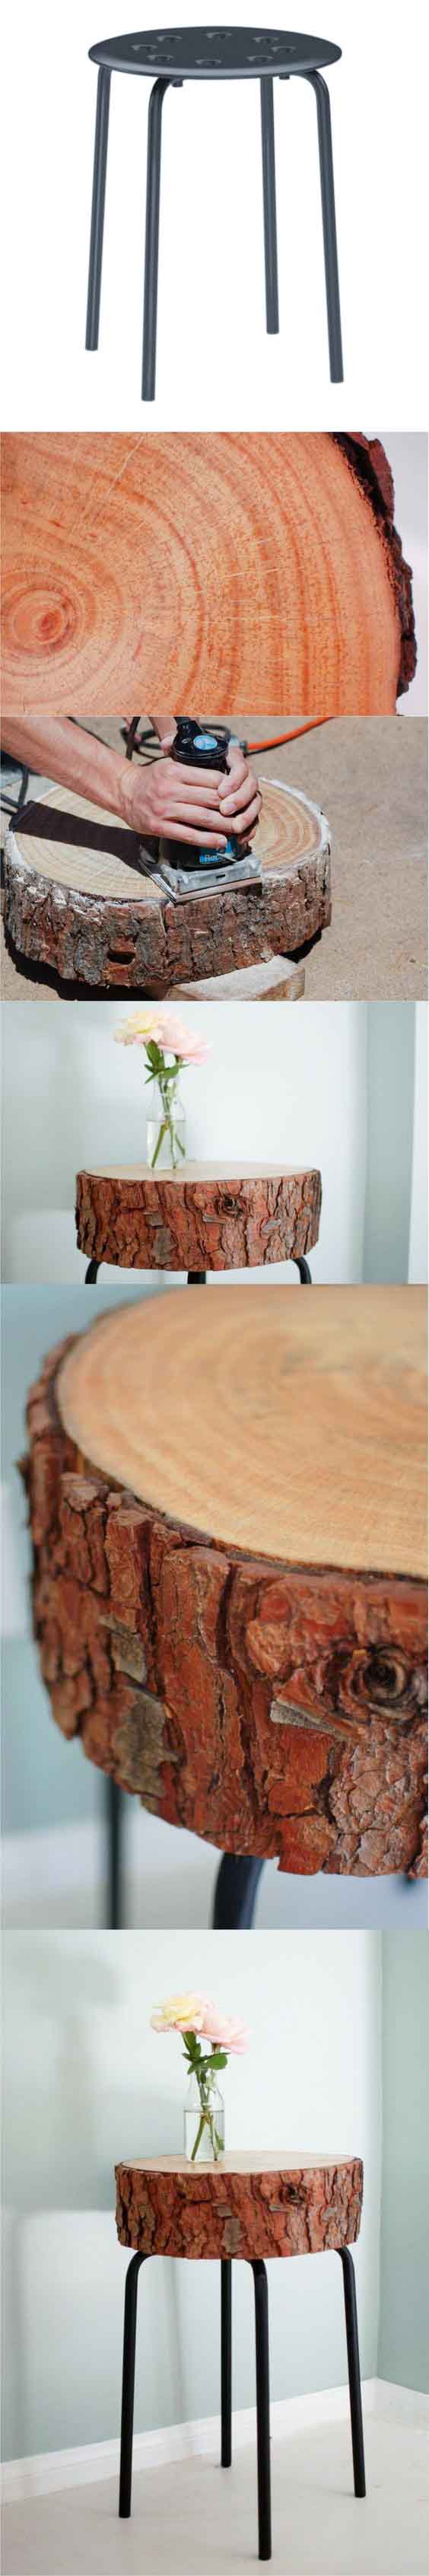 Taburete mesa con tronco